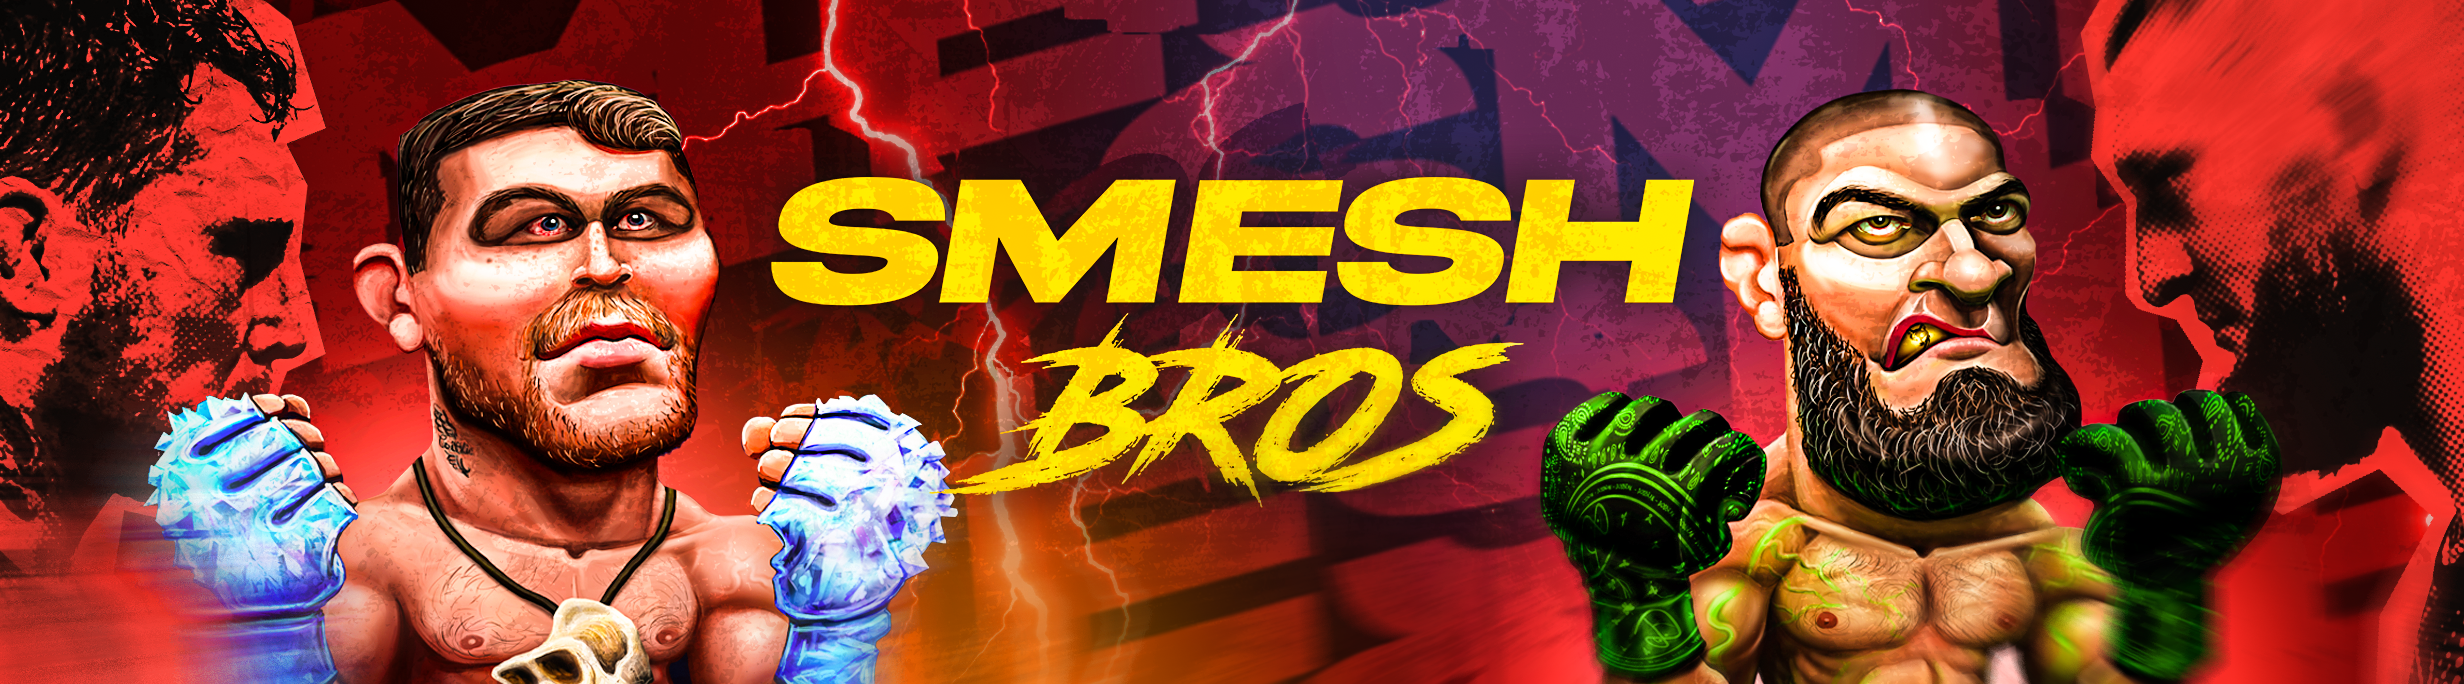 Smesh Bros